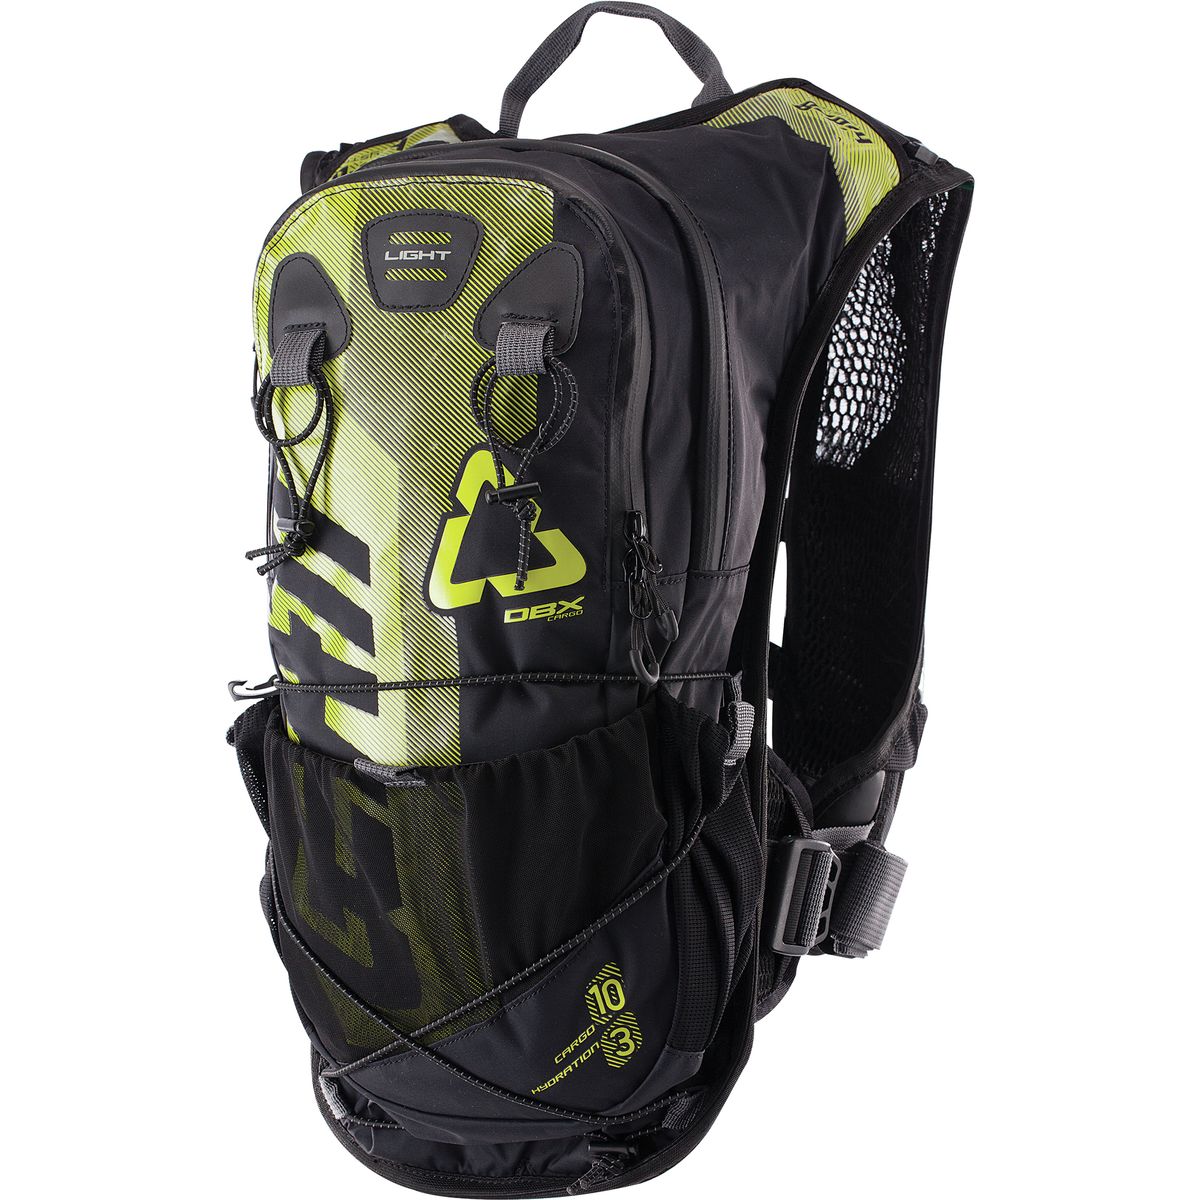 Leatt Cargo 3.0 DBX Hydration Backpack